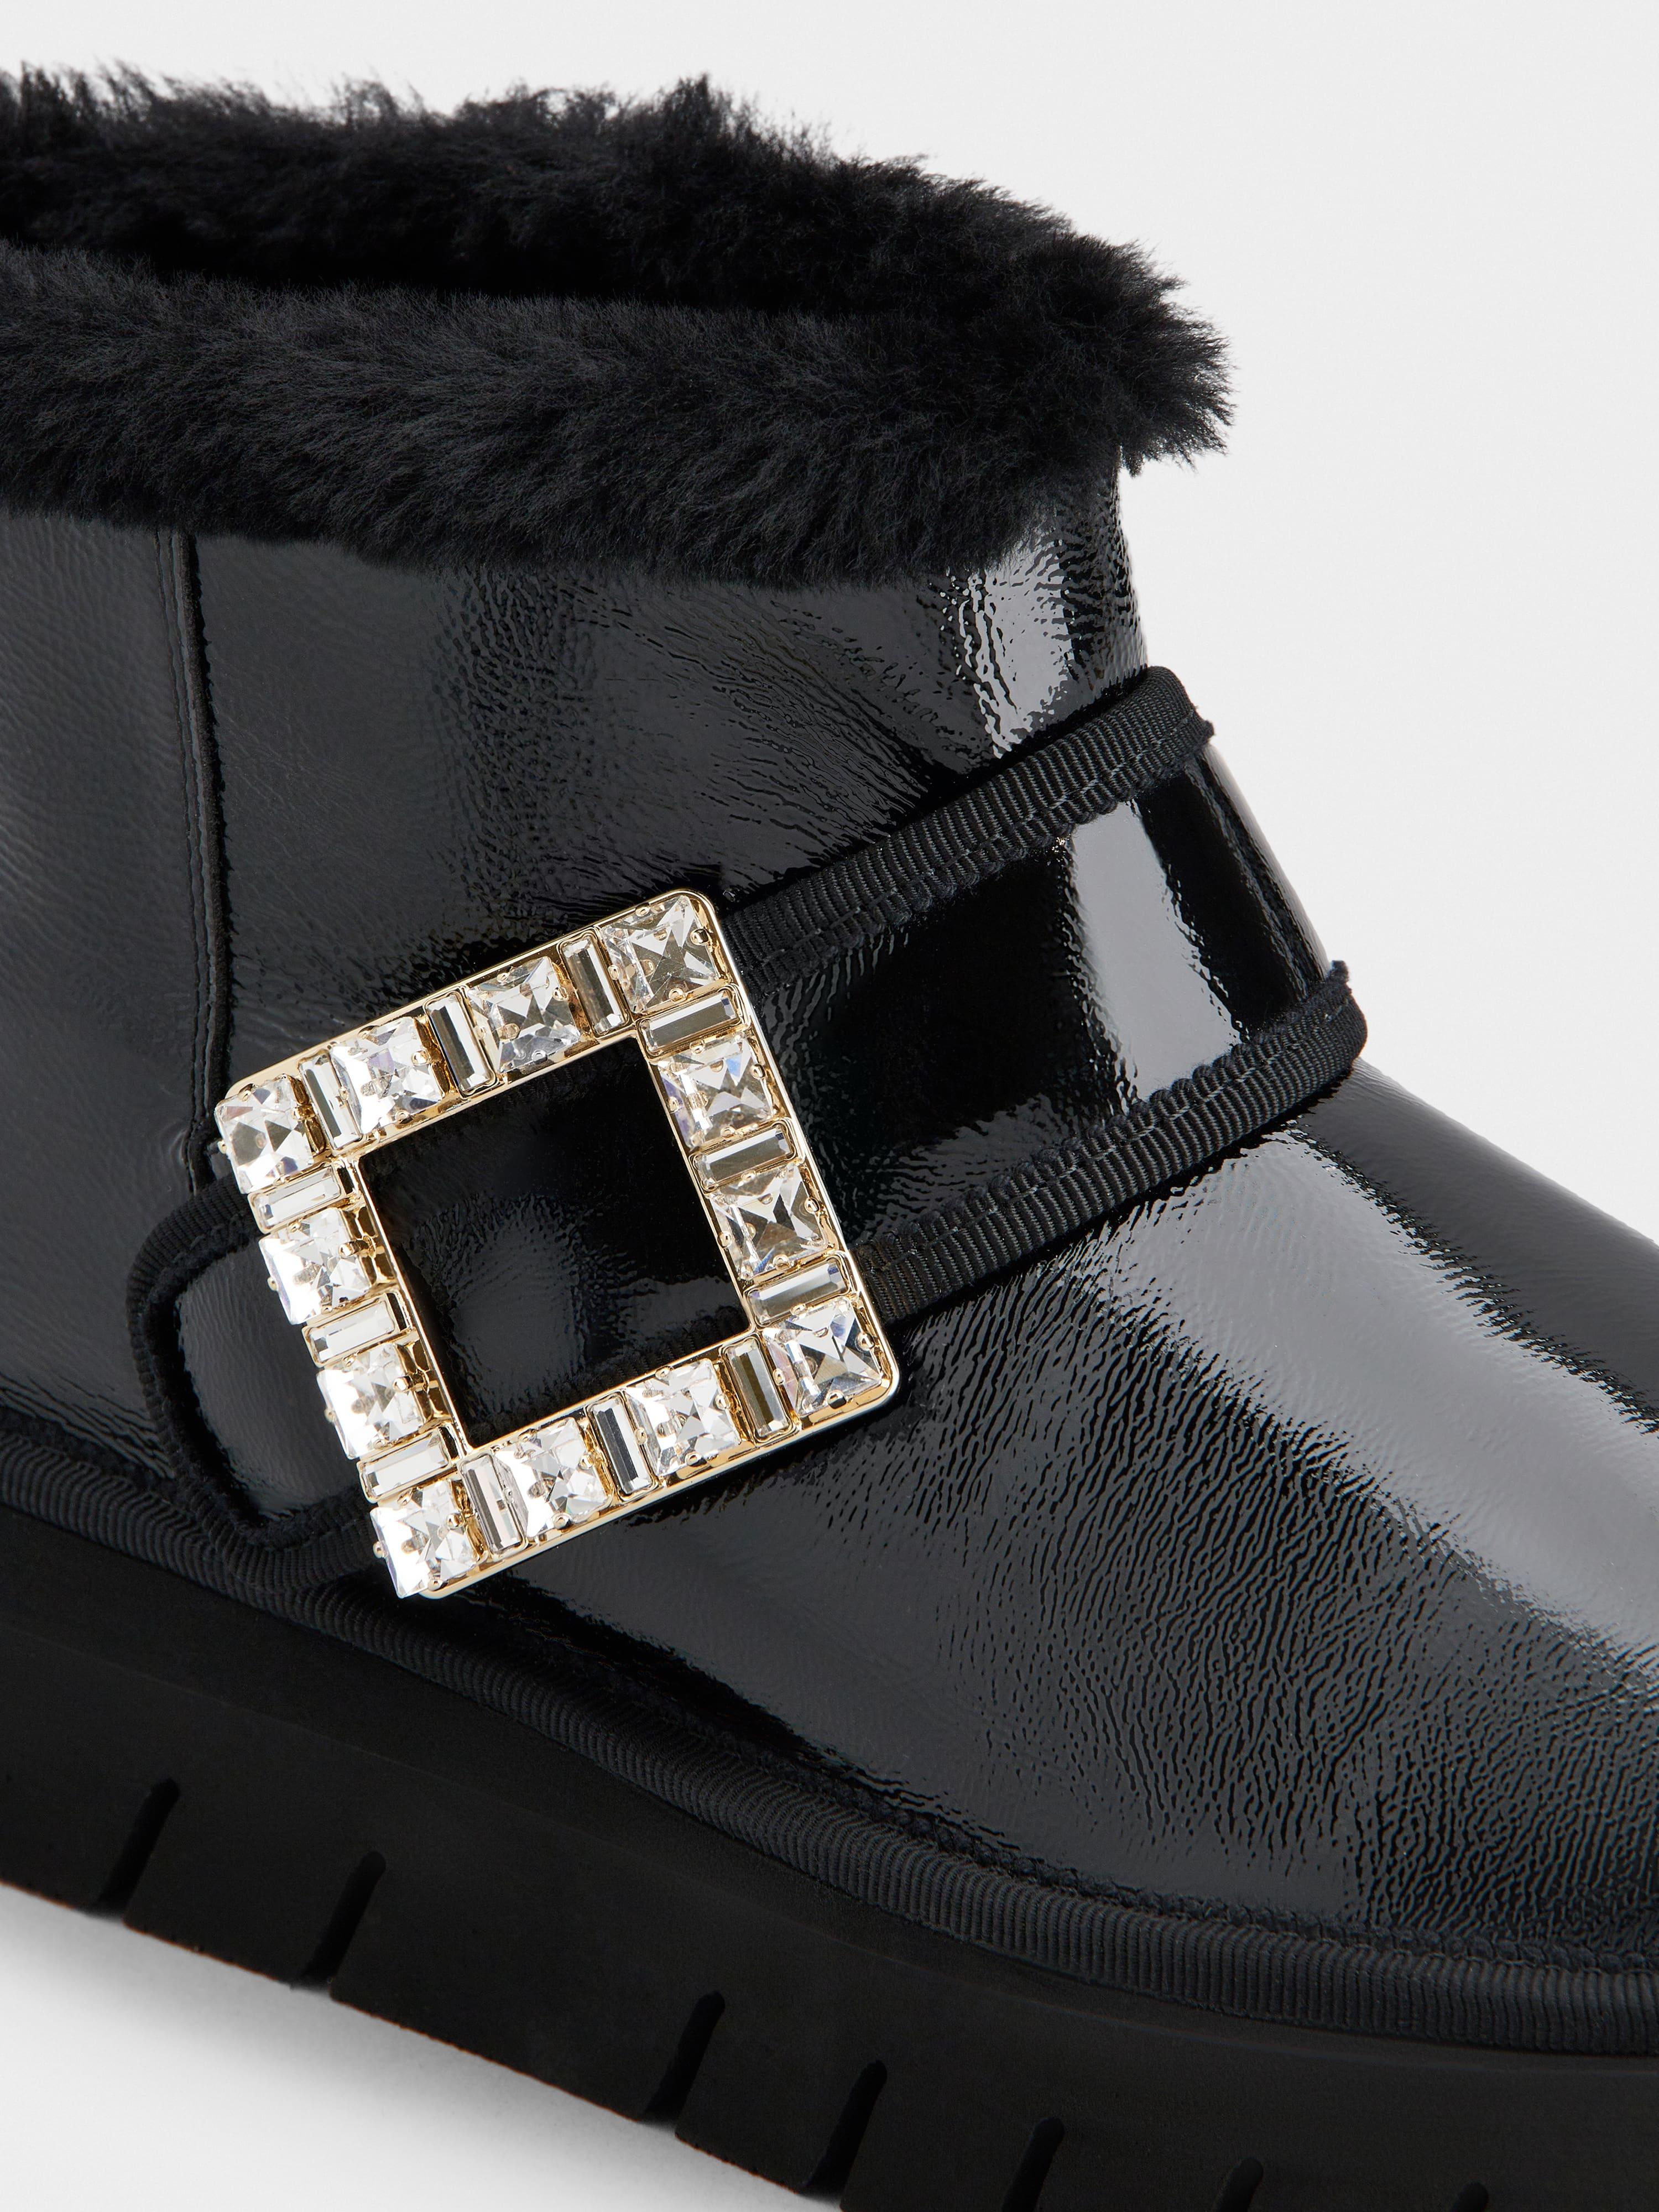 Roger Vivier Viv' Winter Fur Strass Buckle Ankle Boots in Black | Lyst